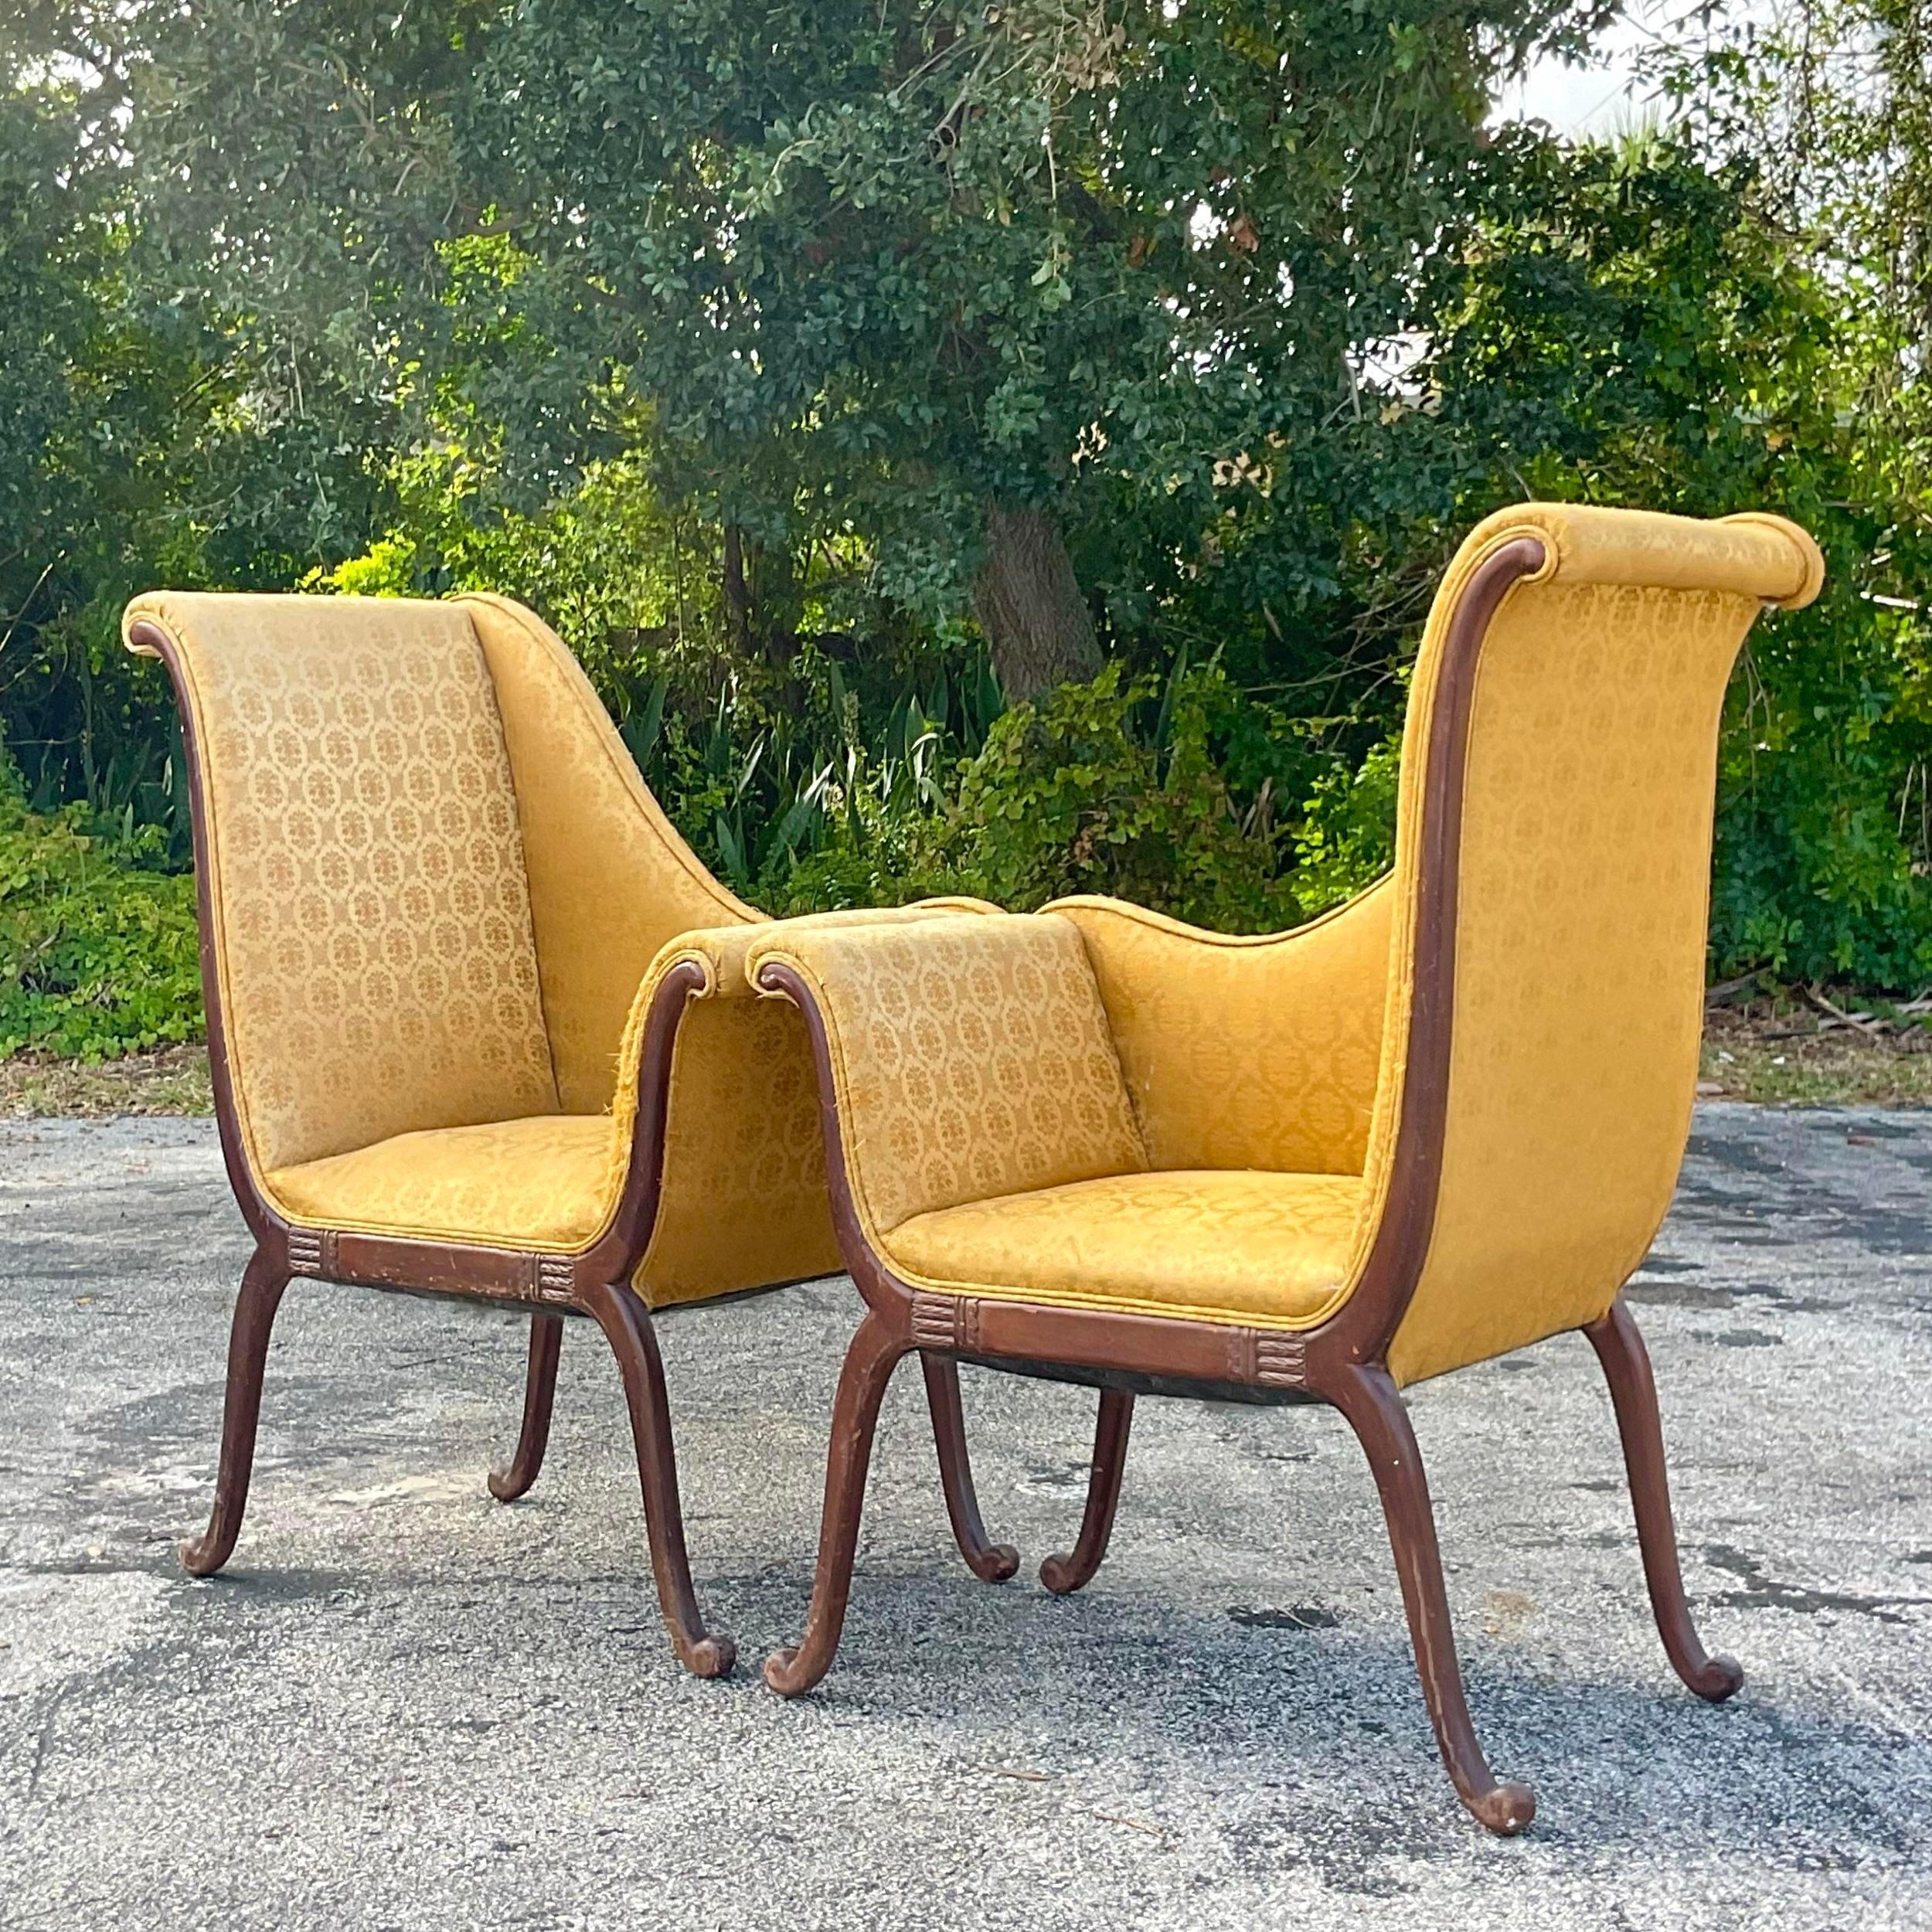 Vintage Regency Parker Deux Chairs im Regency-Stil – ein Paar (Polster) im Angebot